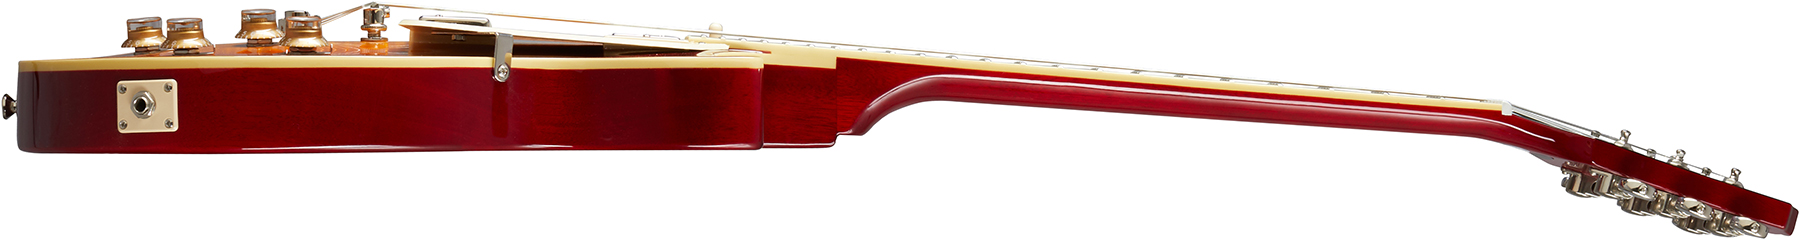 Epiphone Les Paul Standard 60s Gaucher 2h Ht Rw - Iced Tea - Guitarra electrica para zurdos - Variation 2